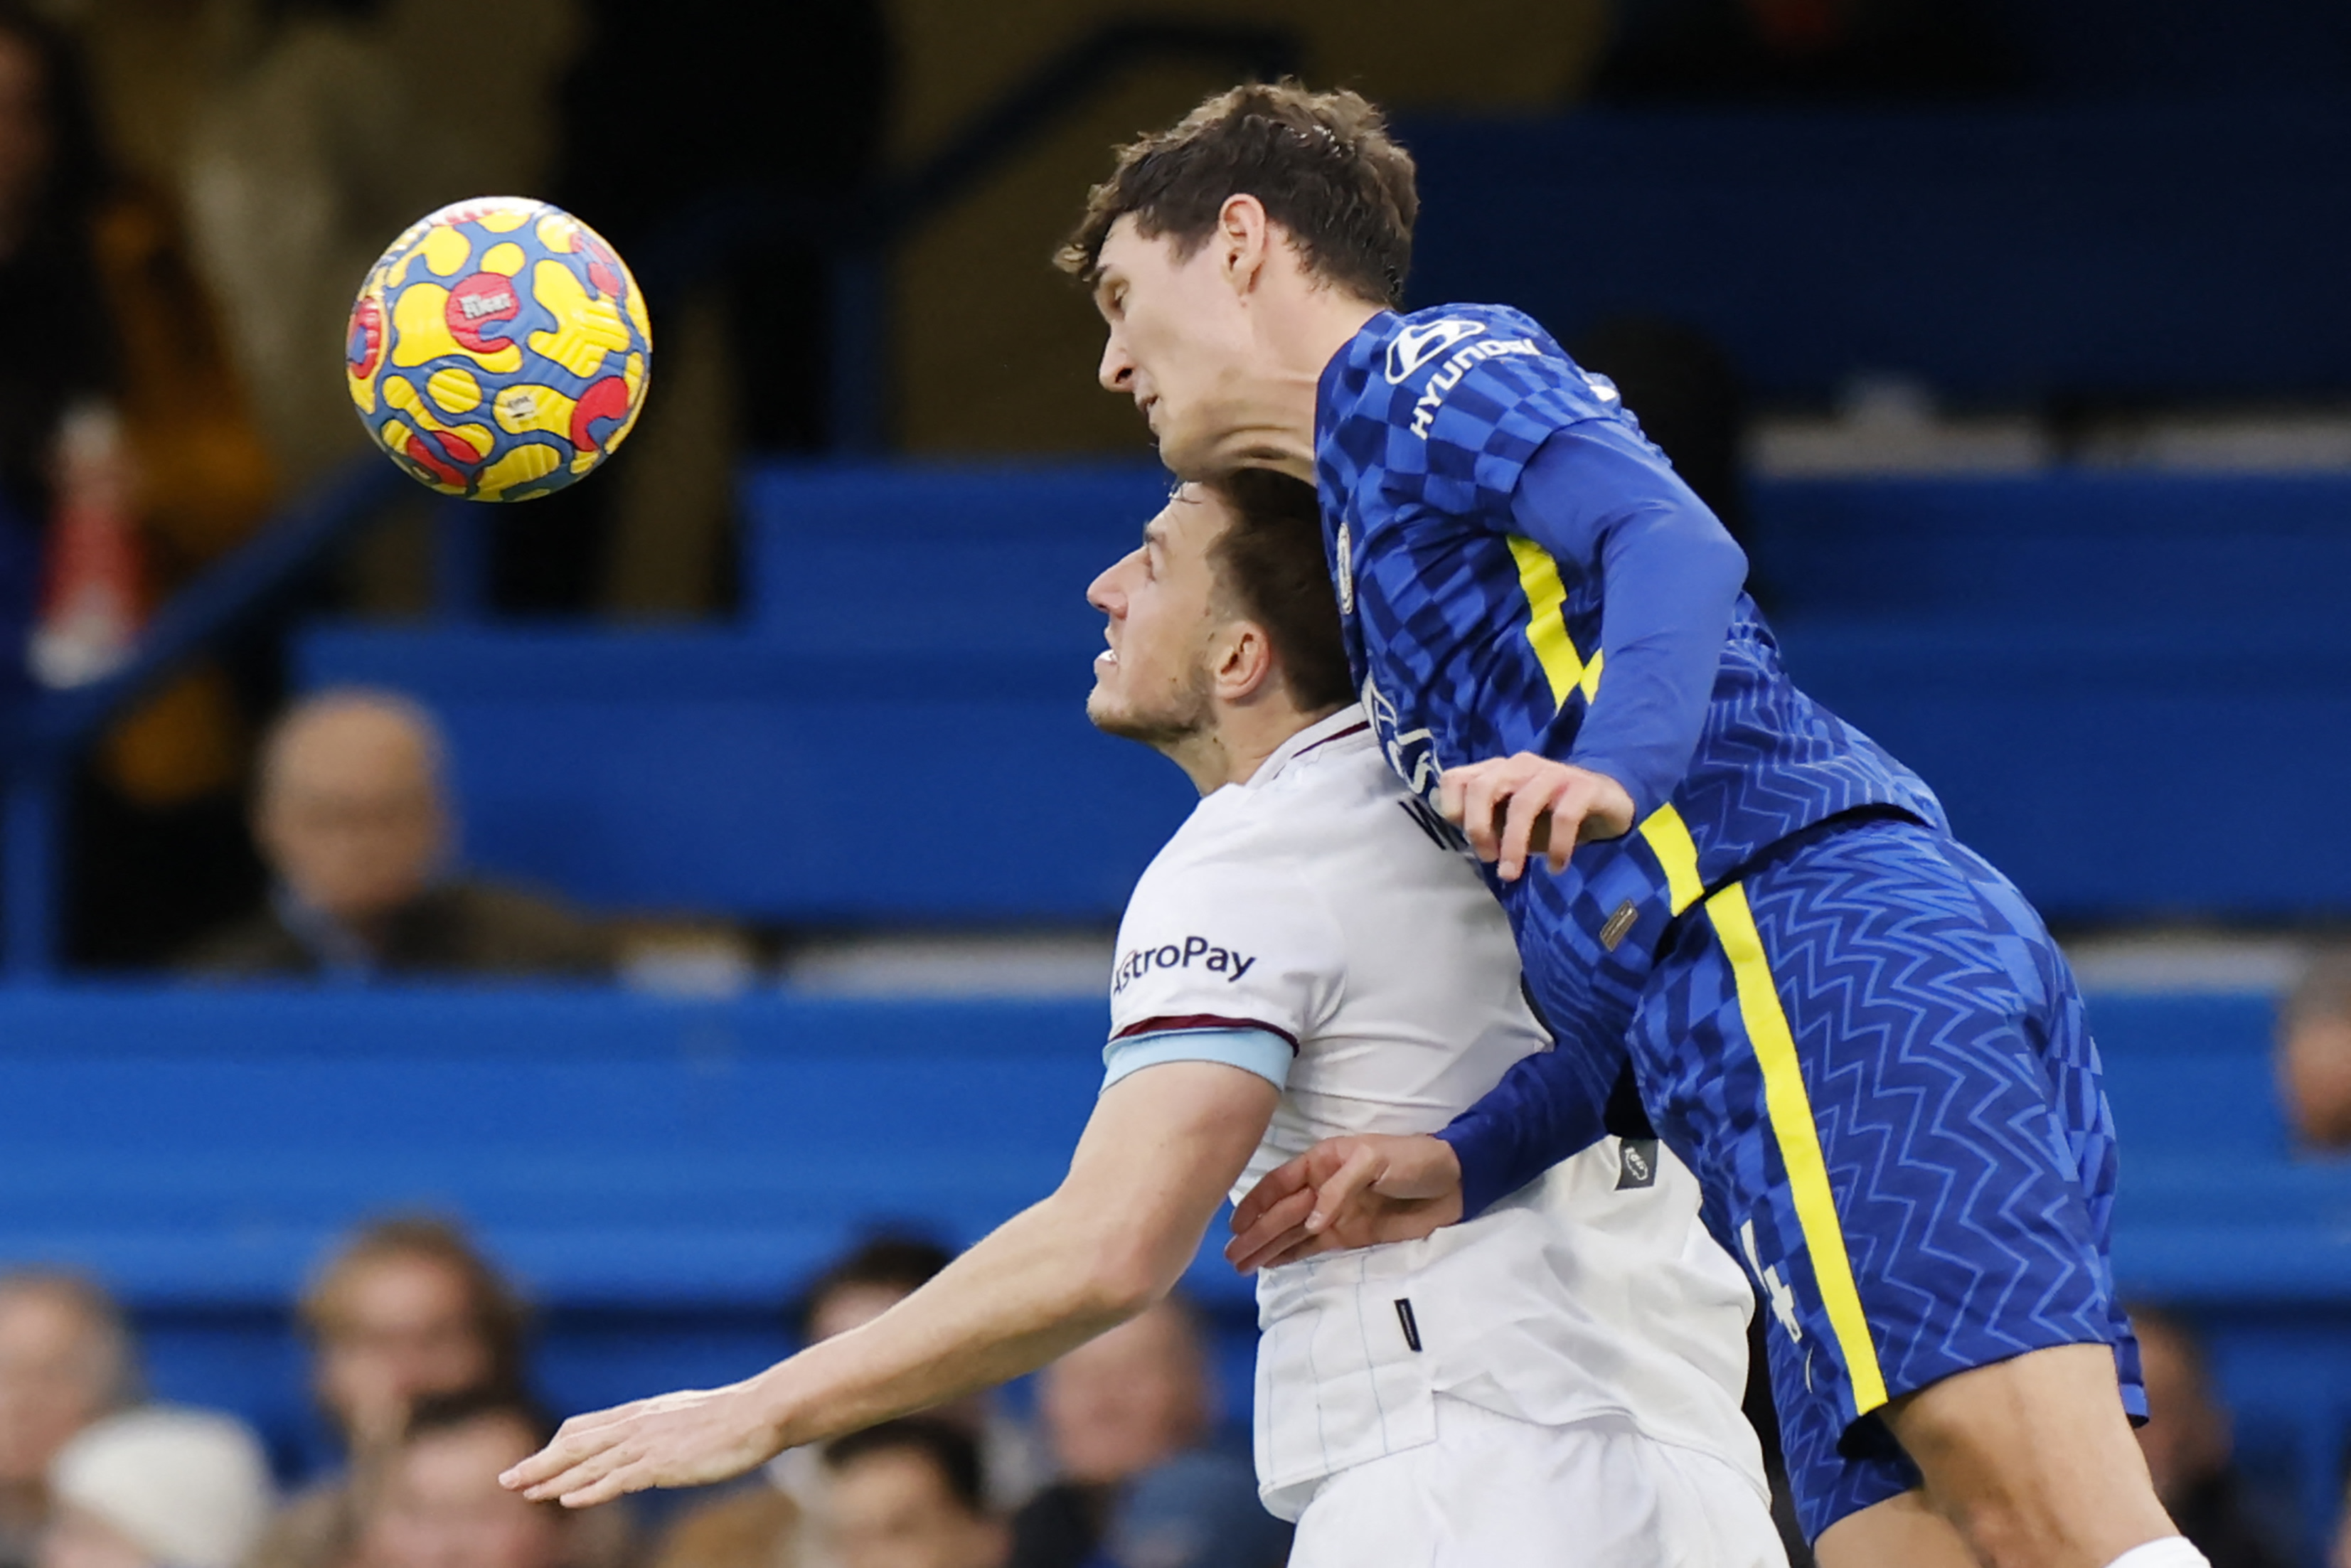 Chelsea 1 Burnley 1 LIVE REACTION: Vydra strikes late to punish wasteful  Blues at Stamford Bridge - latest updates